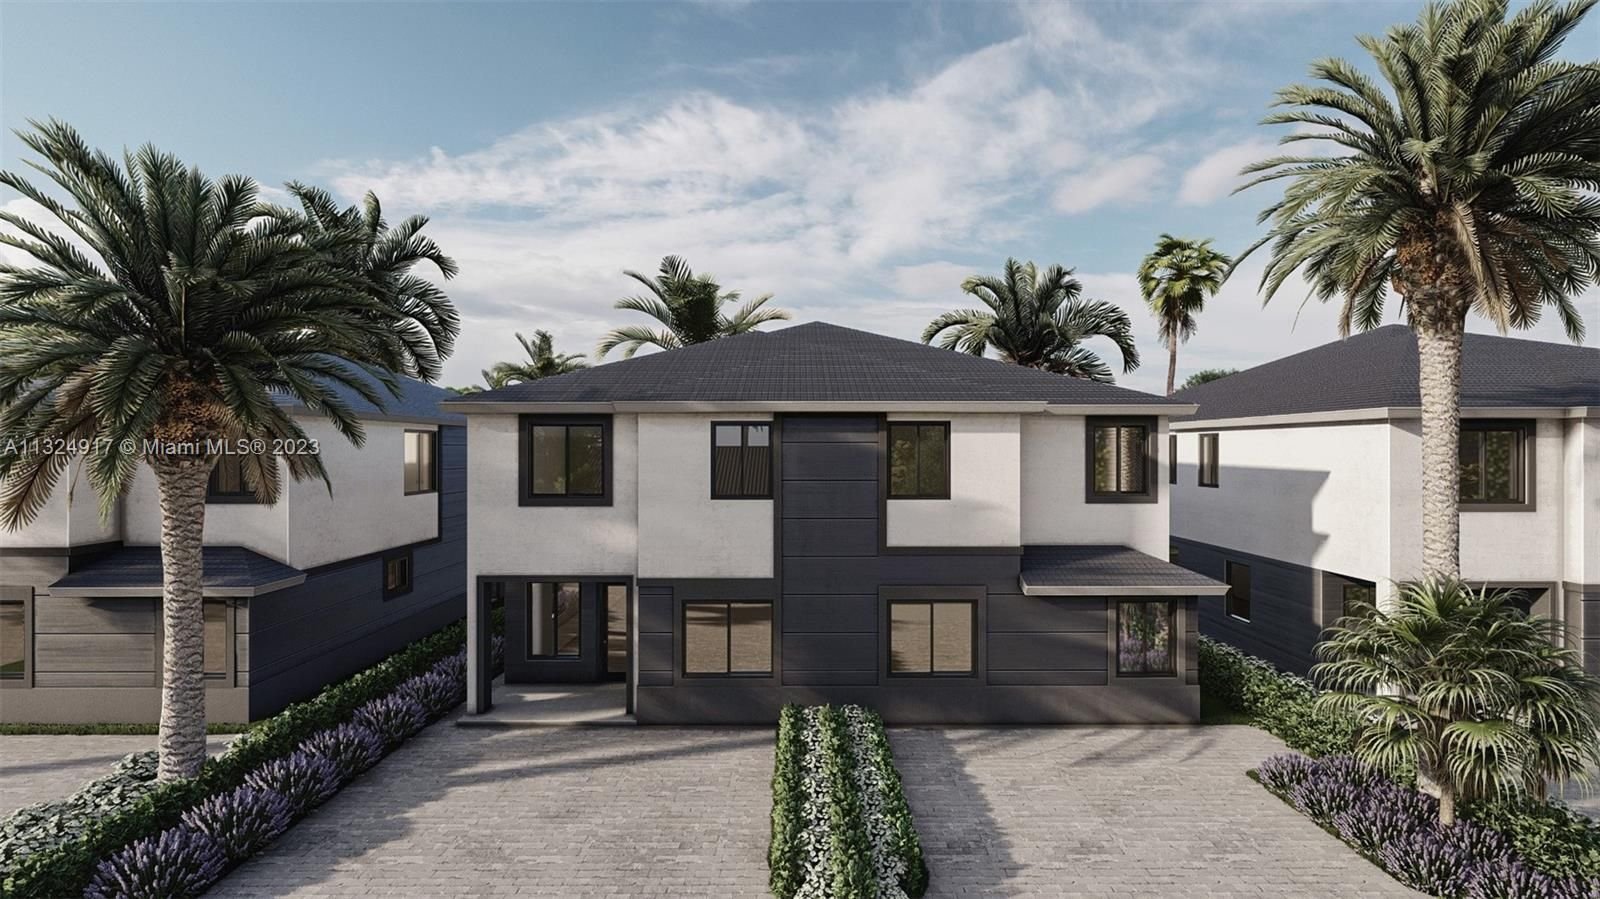 Real estate property located at 22415 125 Av A, Miami-Dade County, Miami, FL